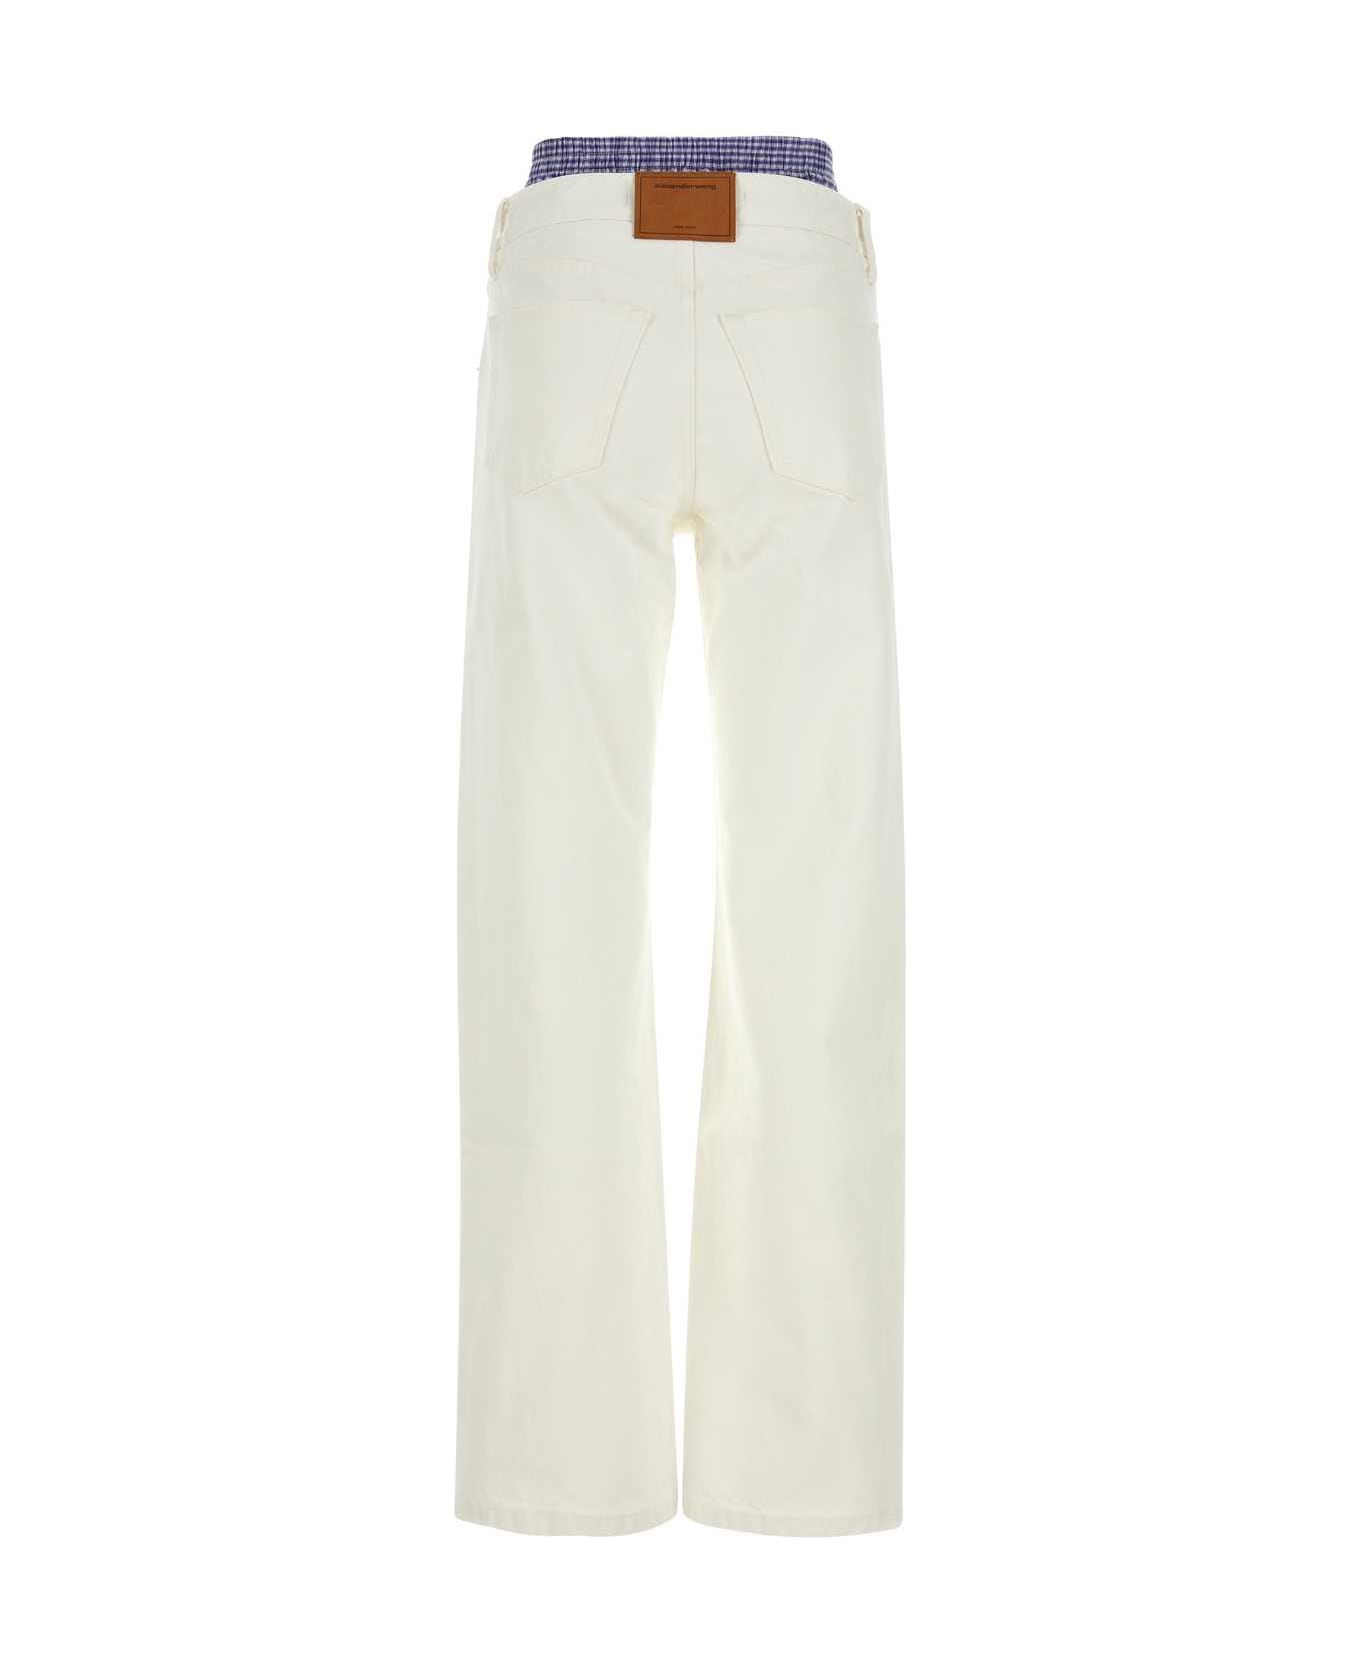 Alexander Wang Ivory Denim Jeans - MOONSHINE